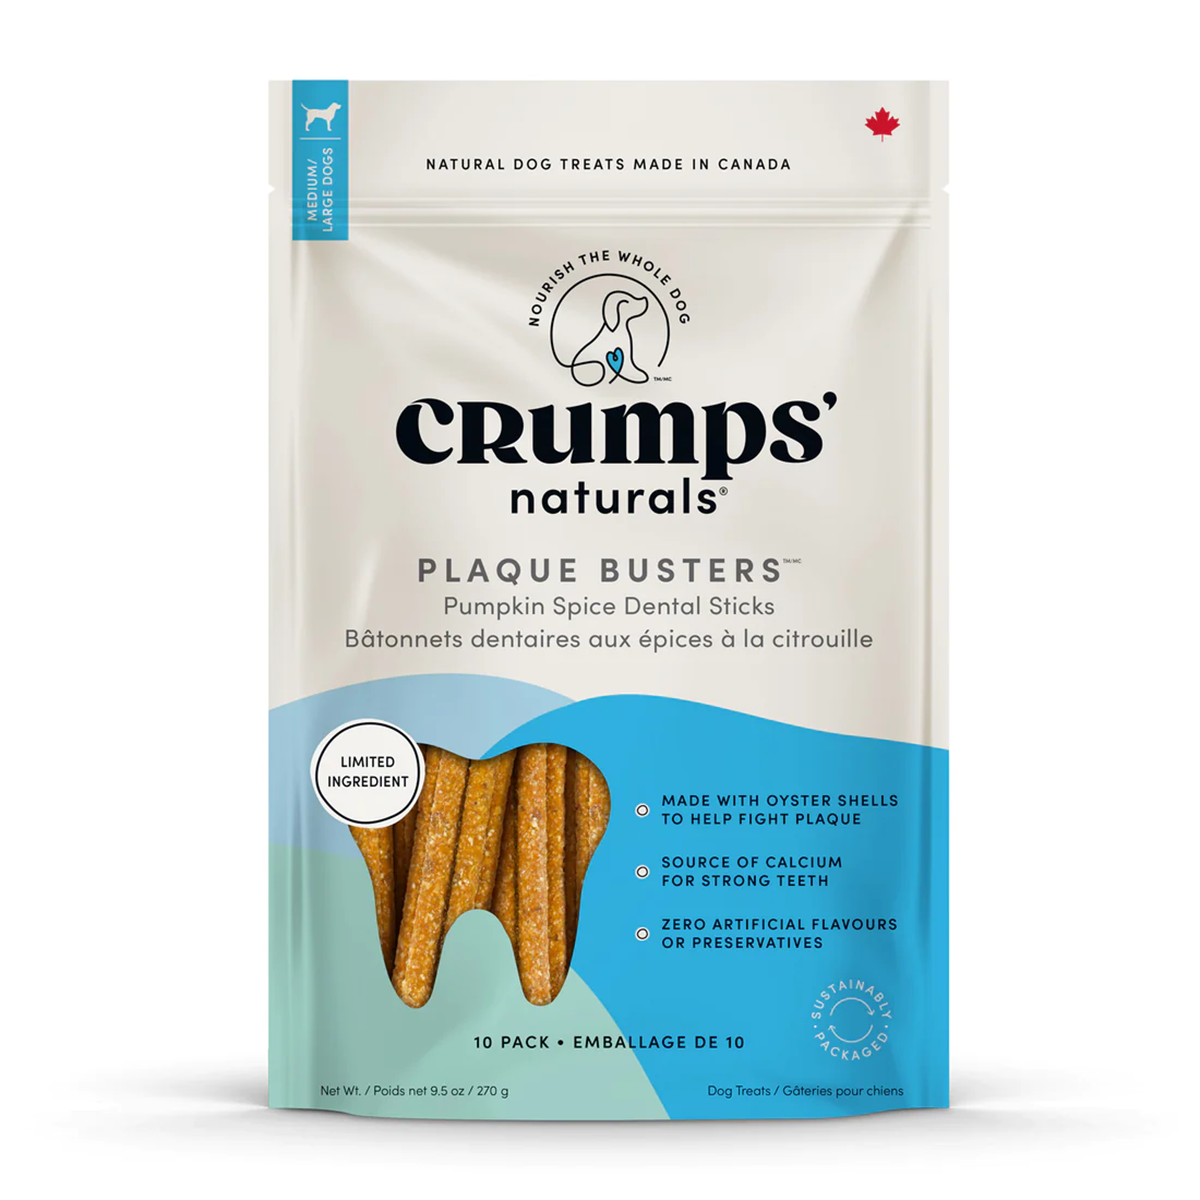 Crumps' Naturals Plaque Busters Dental Sticks Dog Treat - Pumpkin Spice